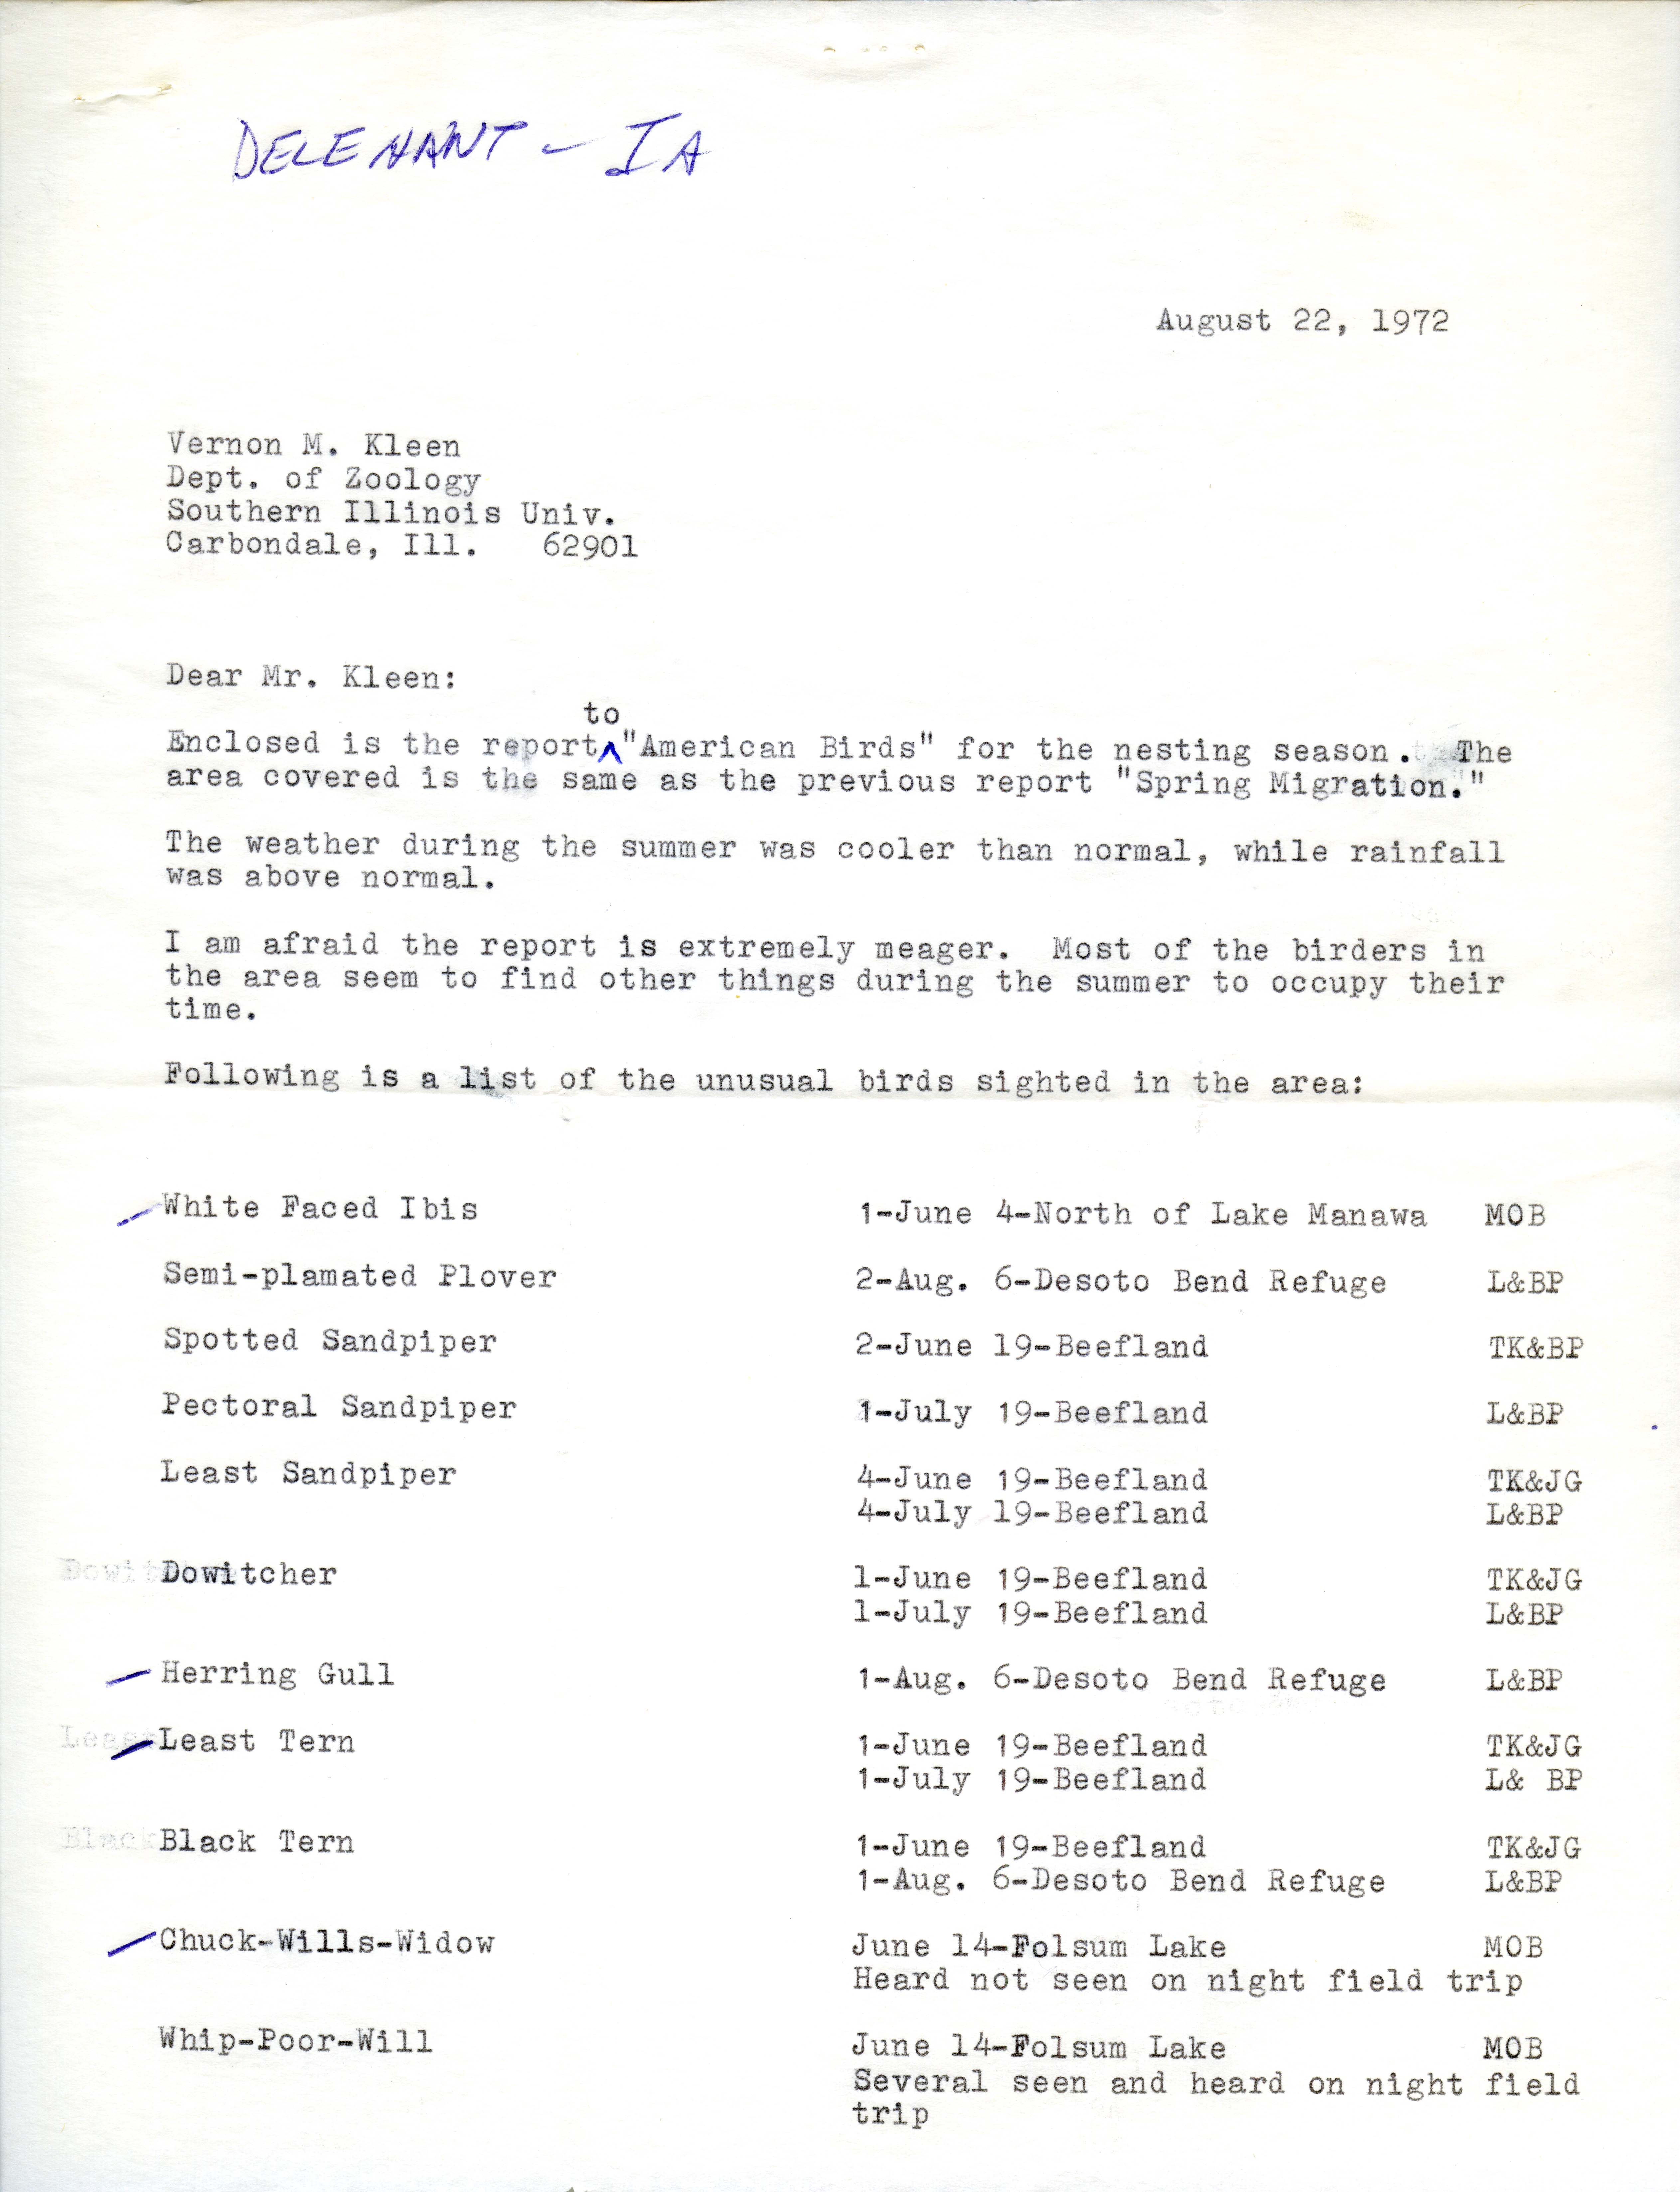 James Delehant letter to Vernon M. Kleen regarding unusual birds sighted during nesting season, August 22, 1972